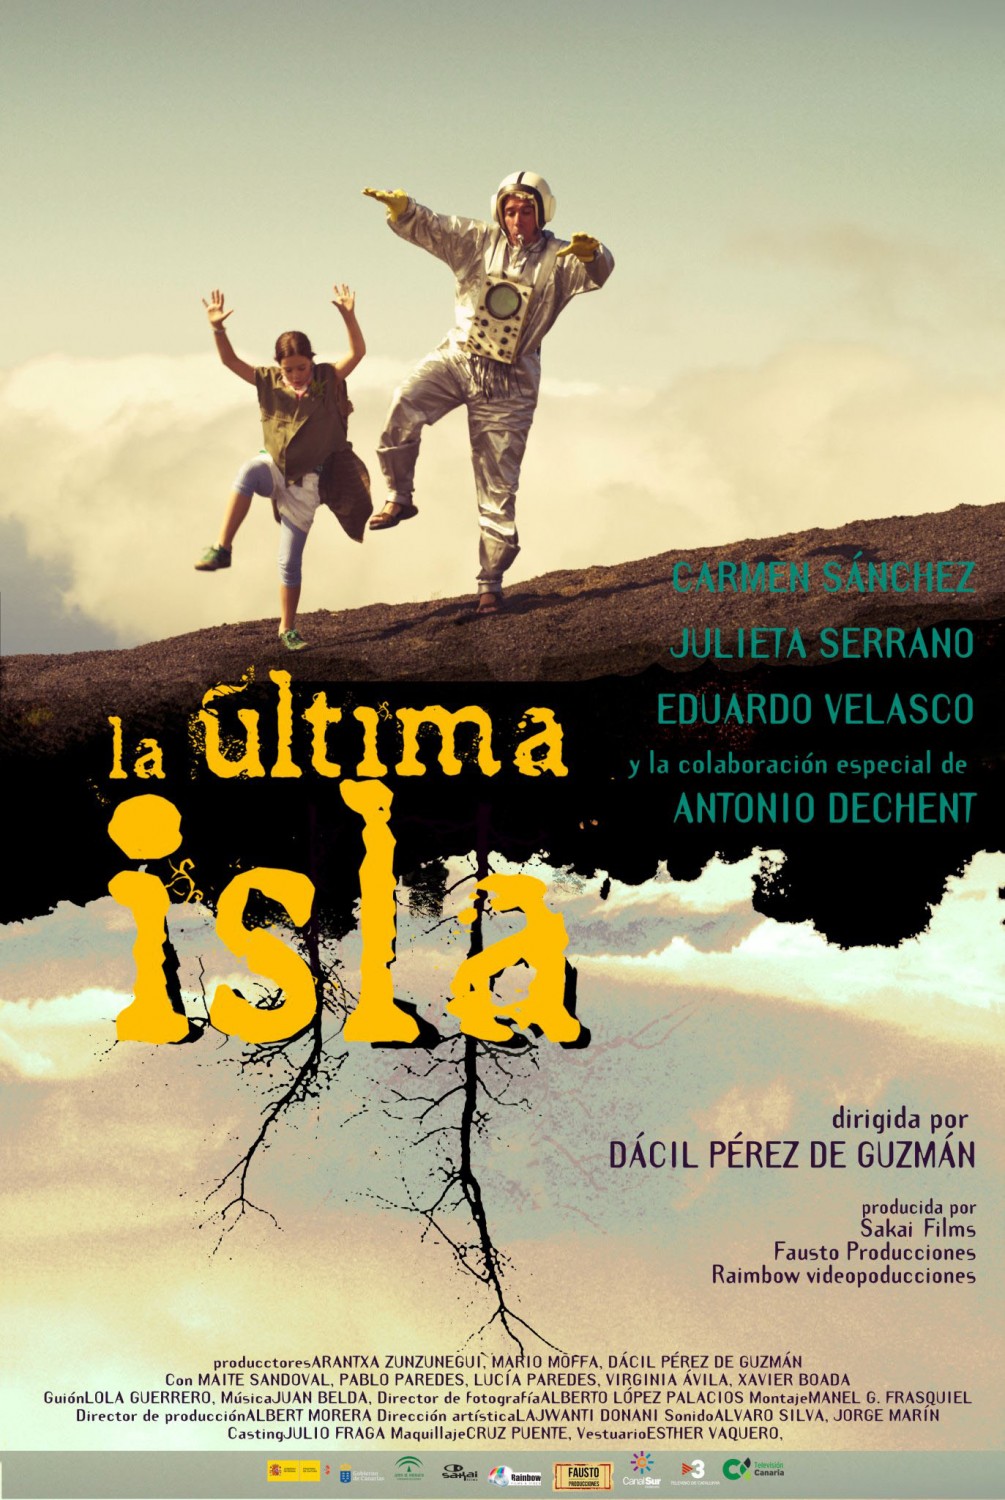 Extra Large Movie Poster Image for La última isla 